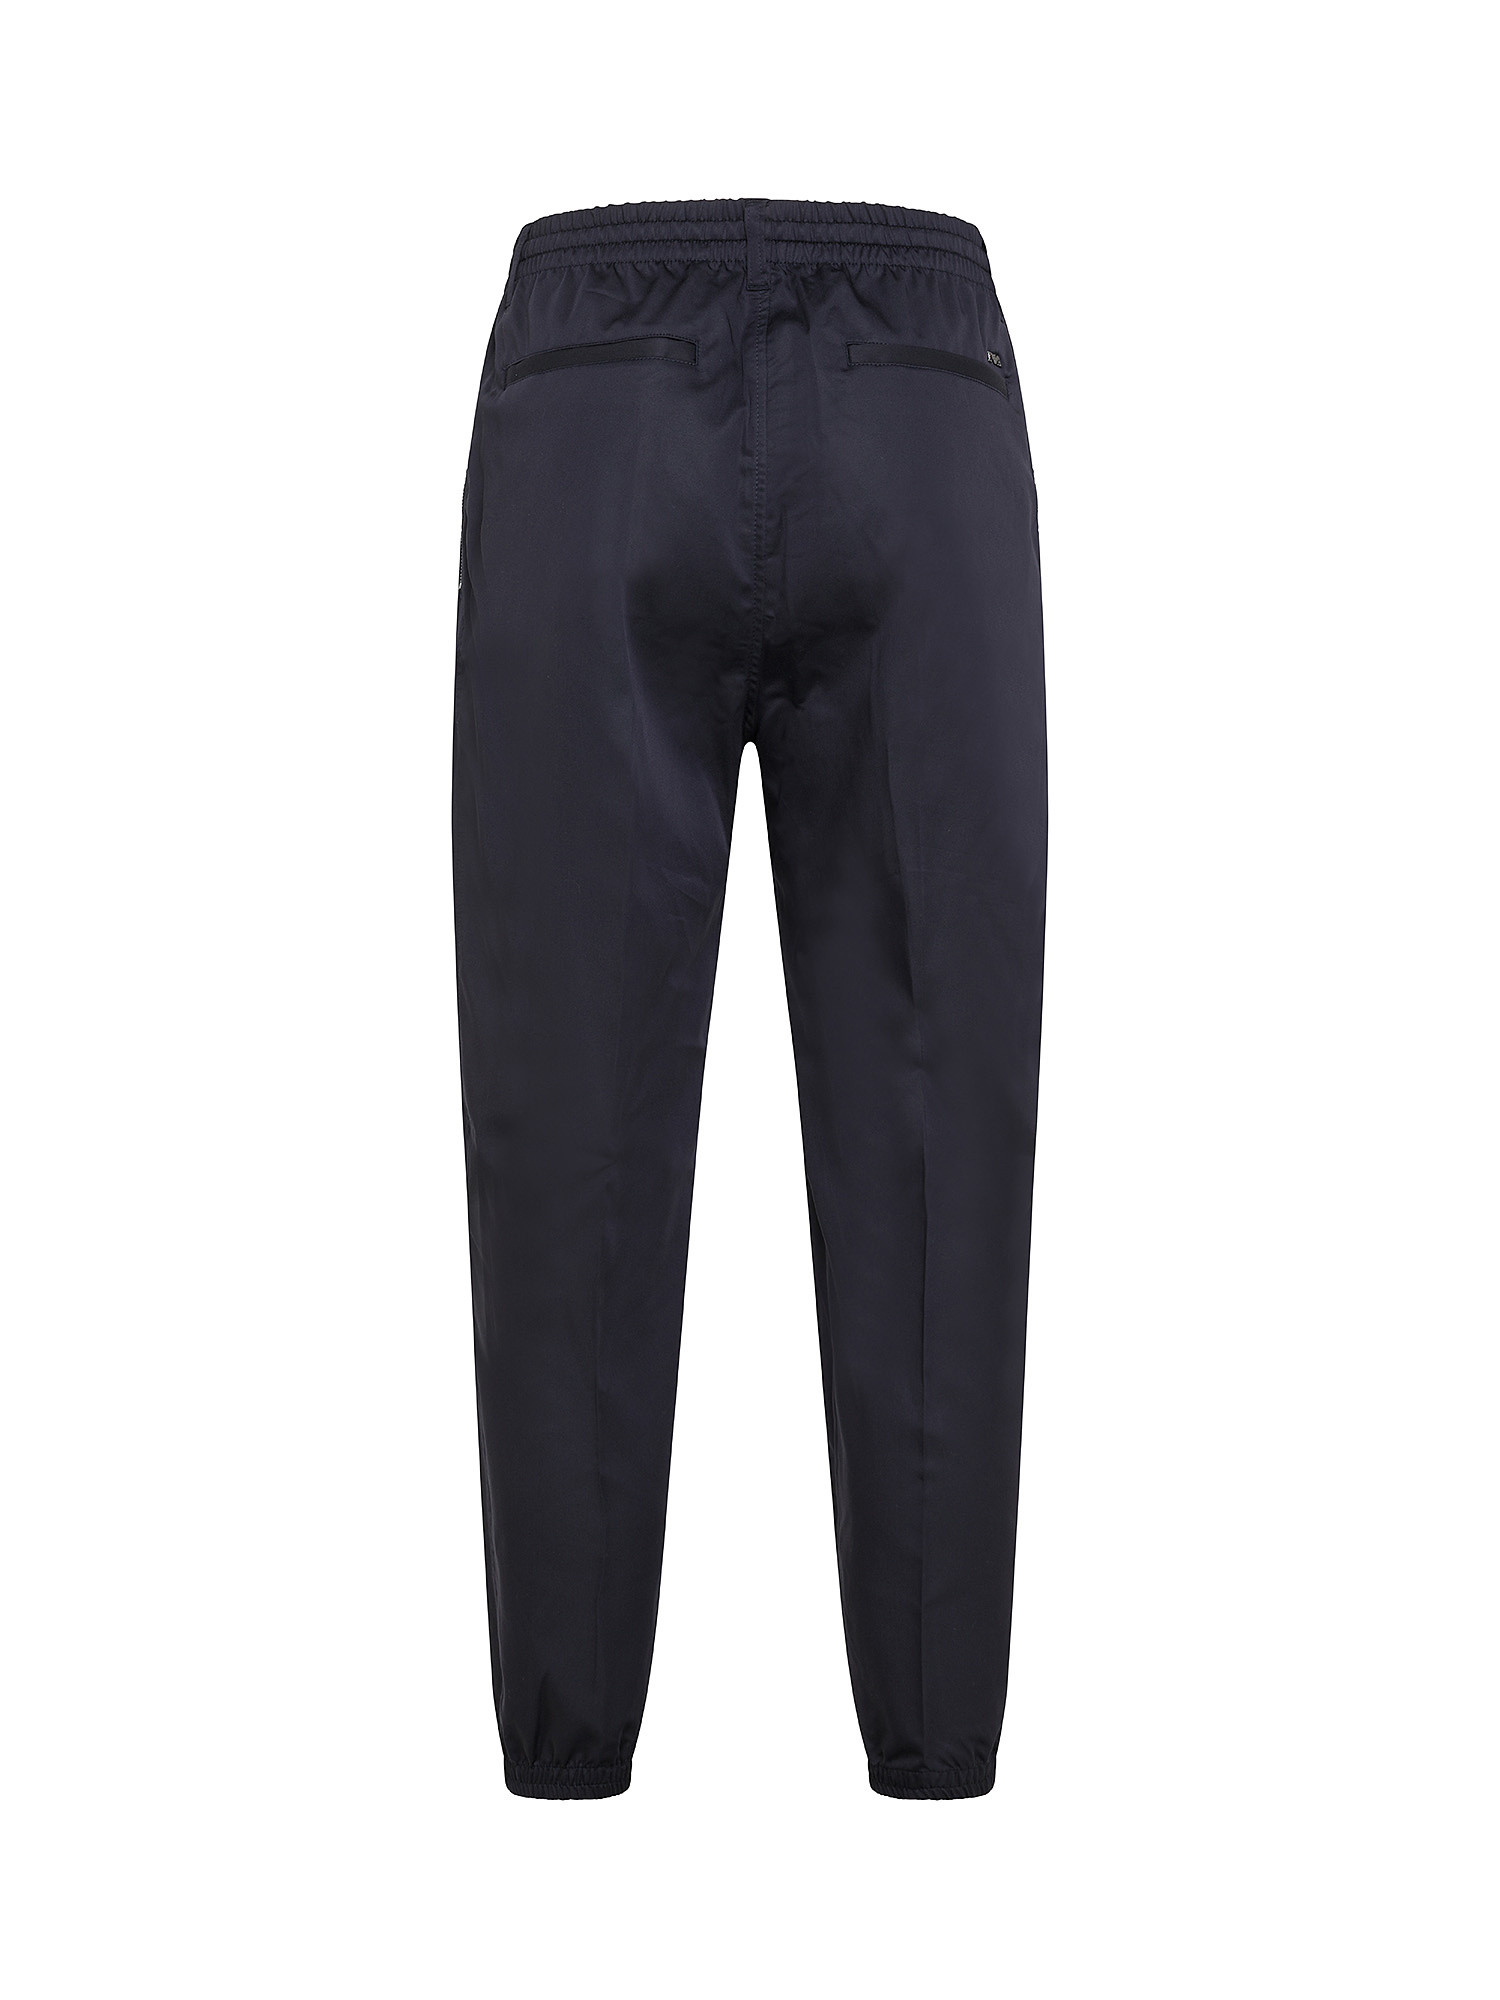 Emporio Armani - Pants with drawstring, Dark Blue, large image number 1